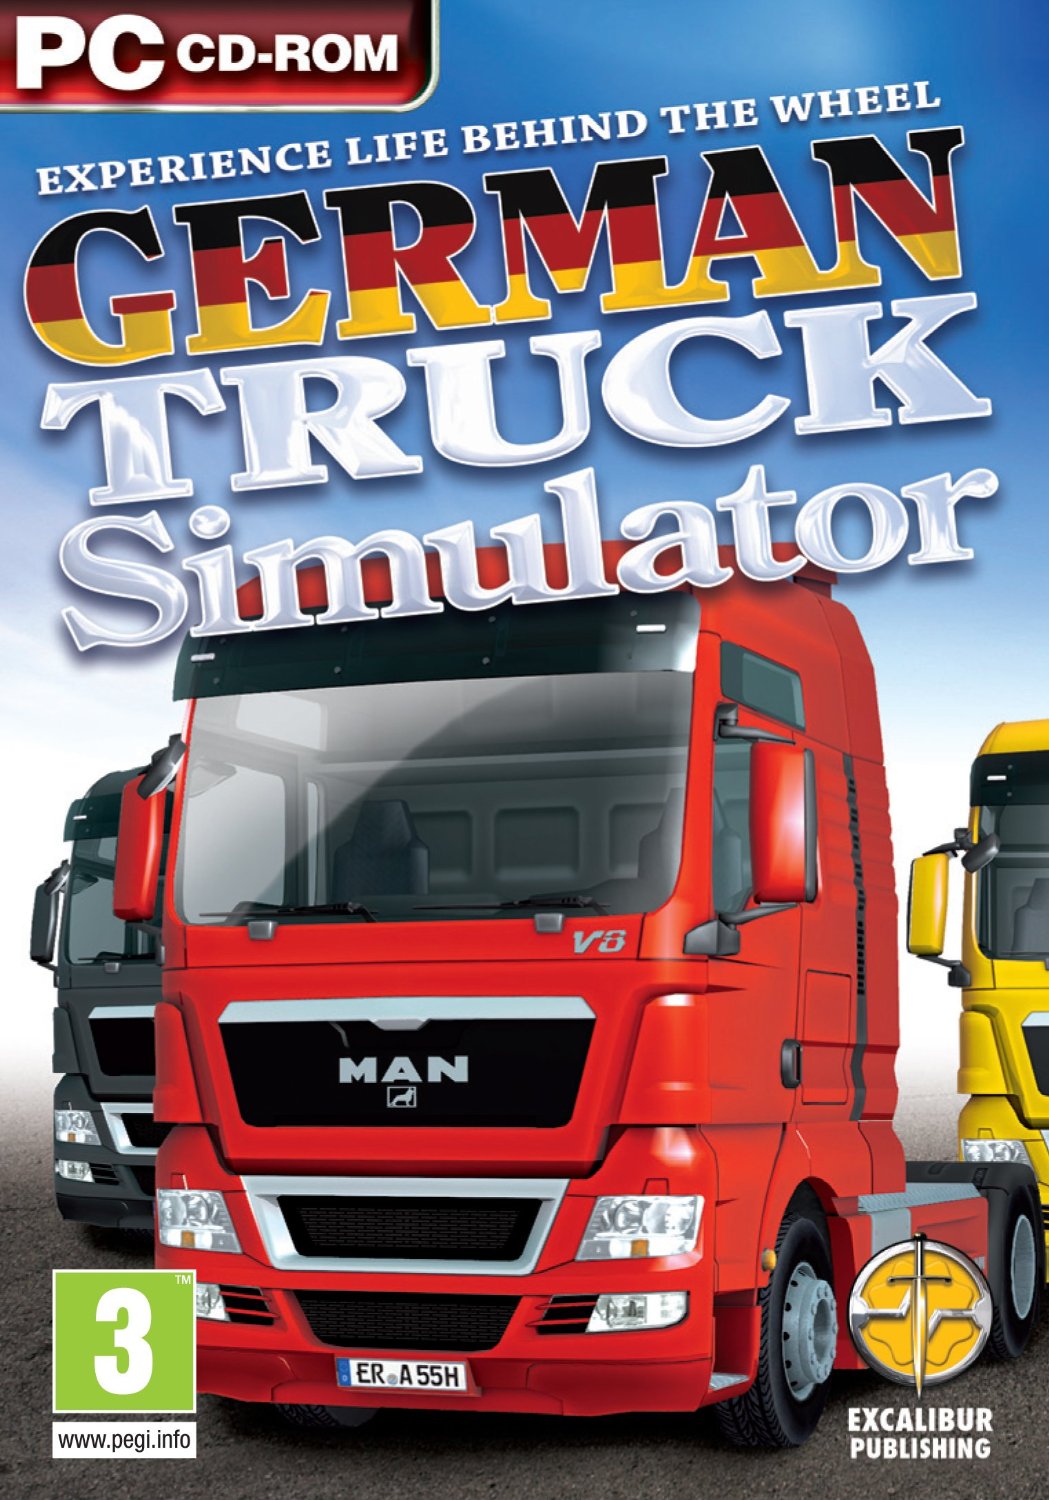 https://static.wikia.nocookie.net/euro-truck-simulator-2/images/b/bb/German_Truck_Simulator_cover.jpg/revision/latest?cb=20160216012115